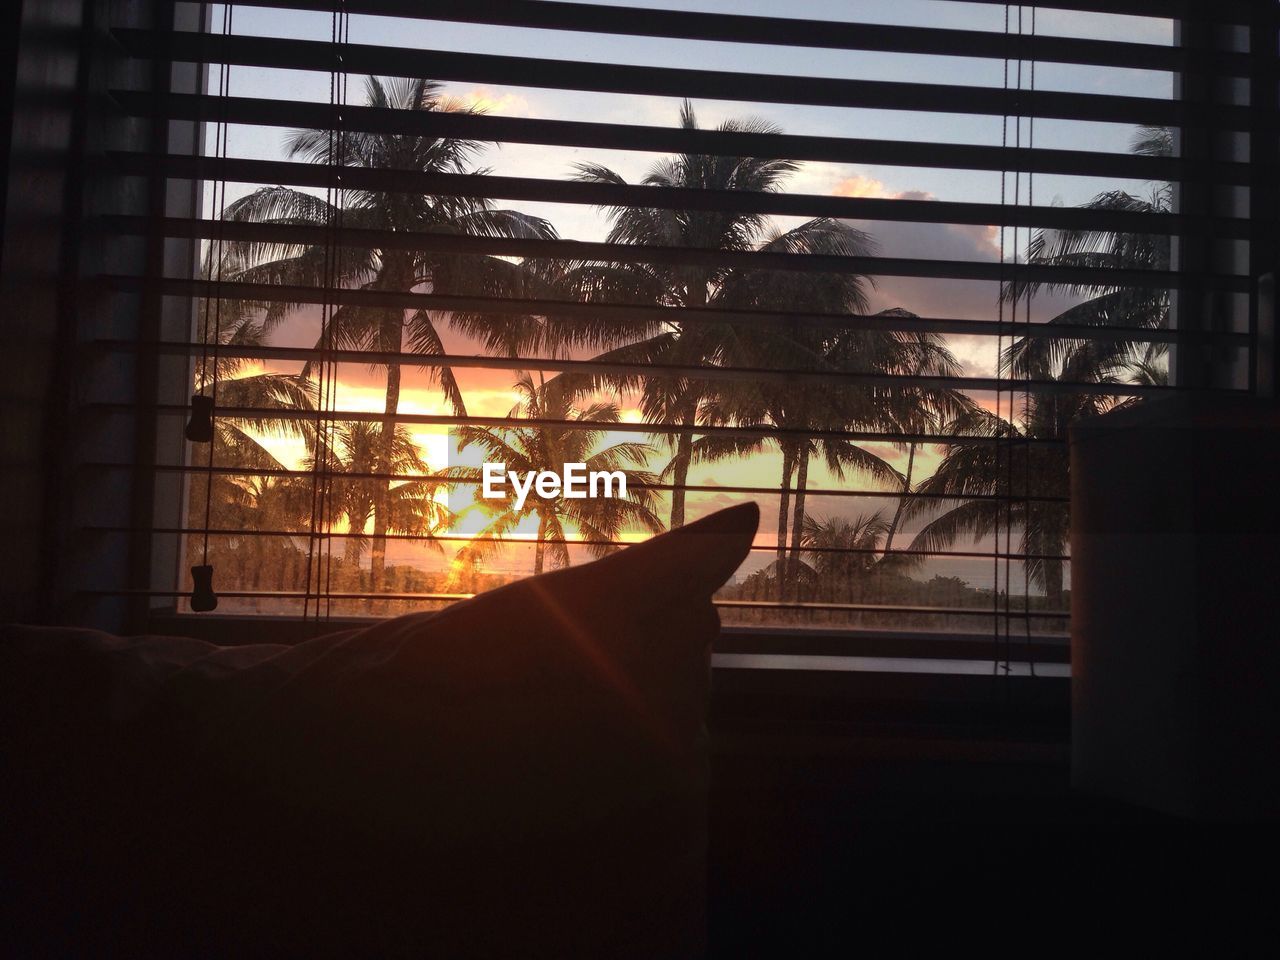 Palm trees during sunrise seen through window